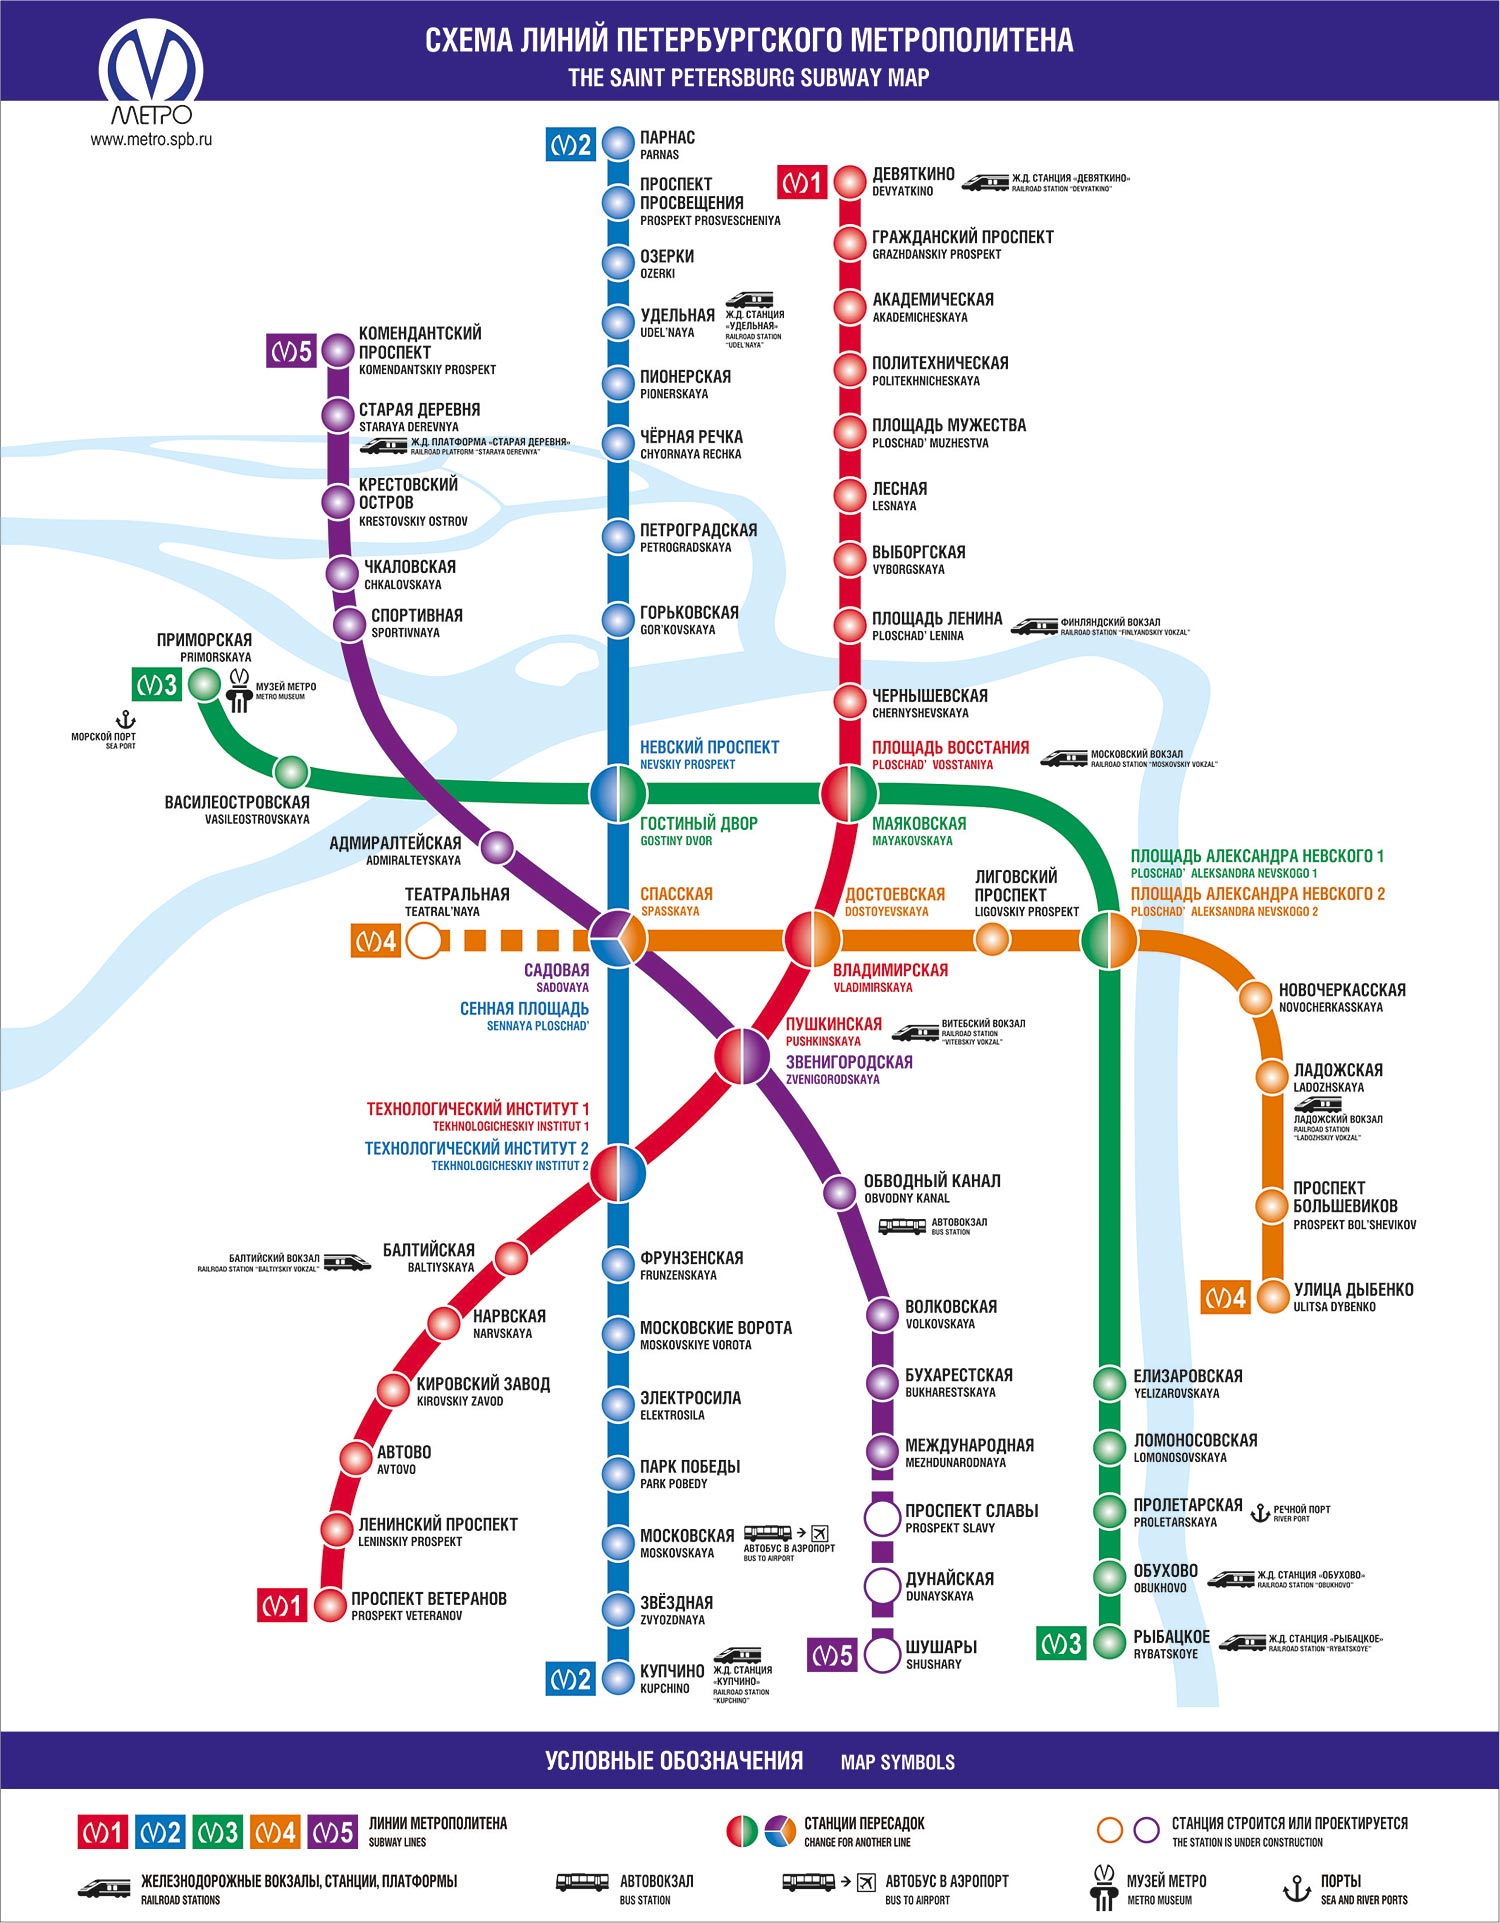 Sain-Petersburg subway map